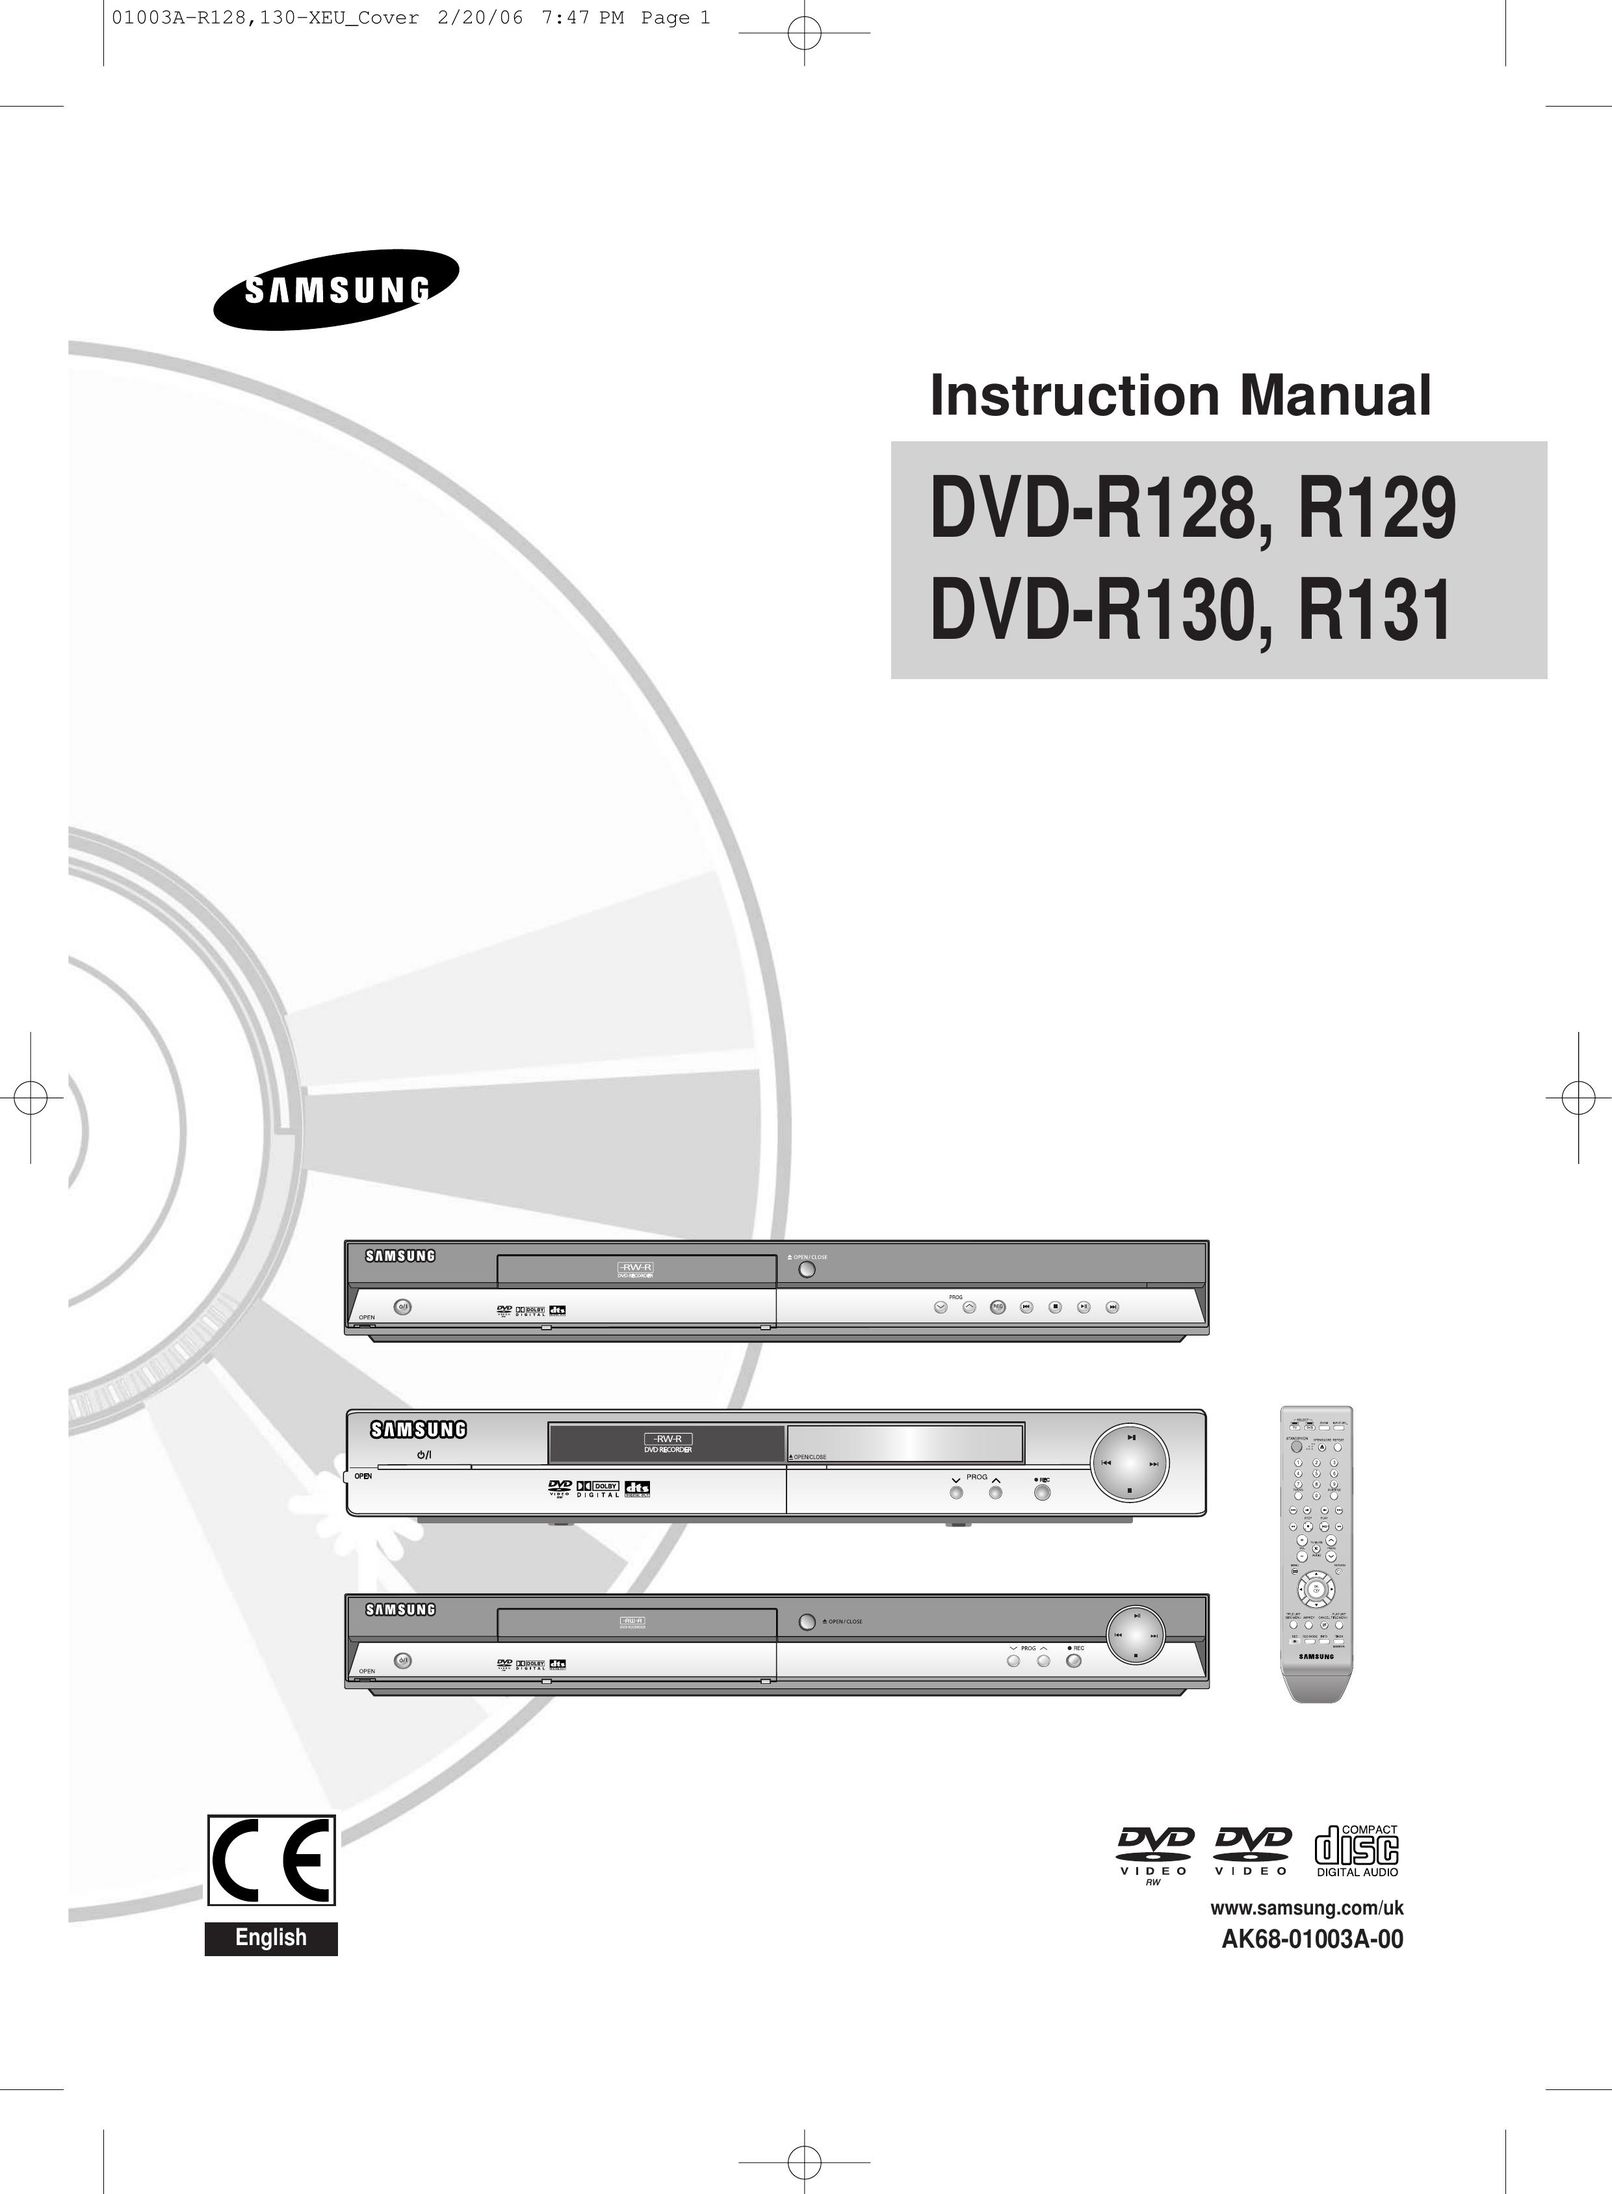 Samsung DVDR131 DVD Recorder User Manual